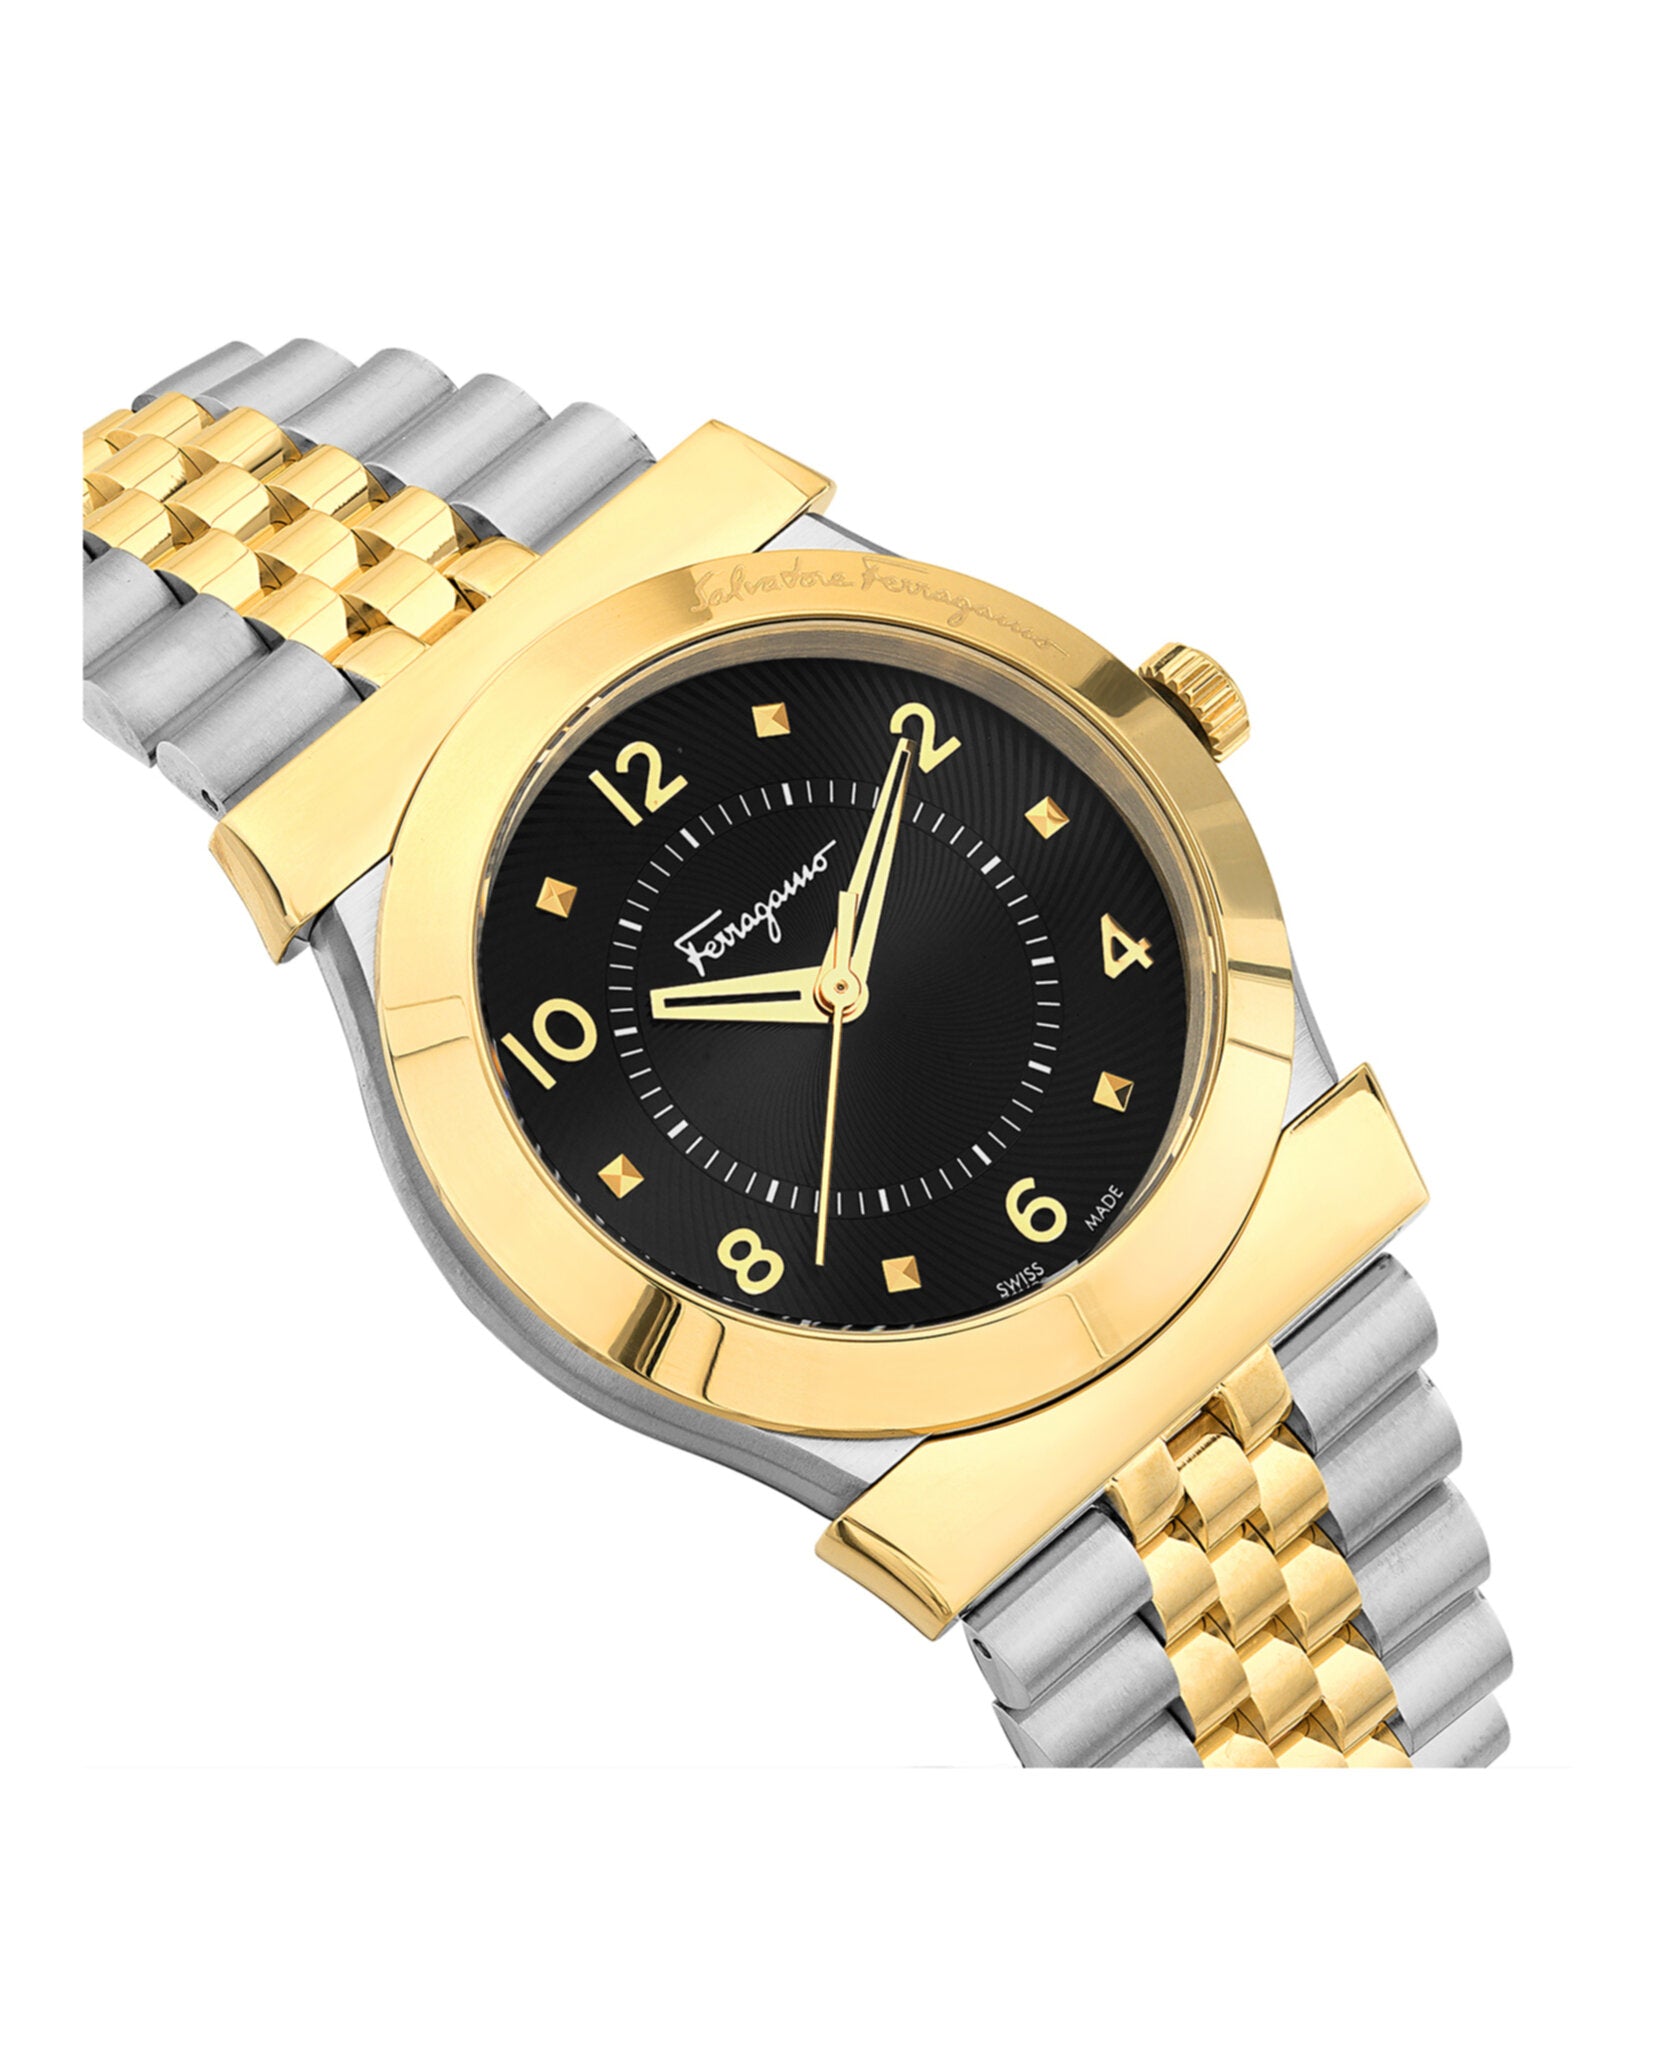 Vega Bracelet Watch